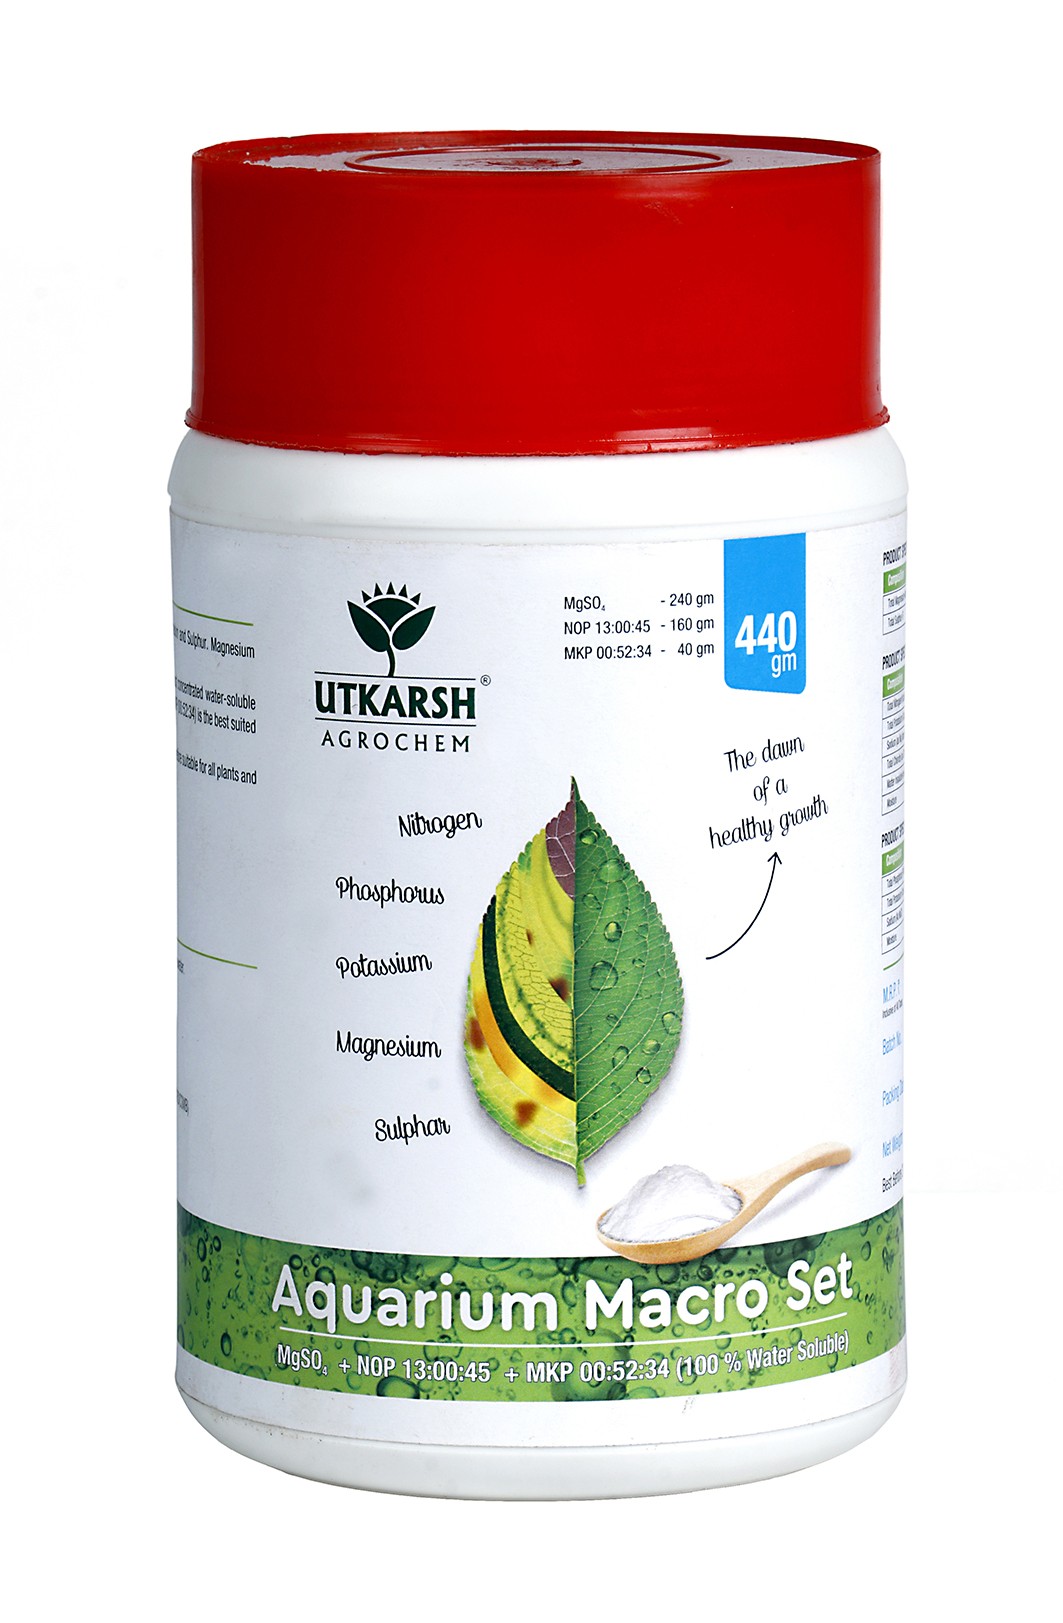 Utkarsh Aquarium Macro Set Fertilizer - 440 Gm